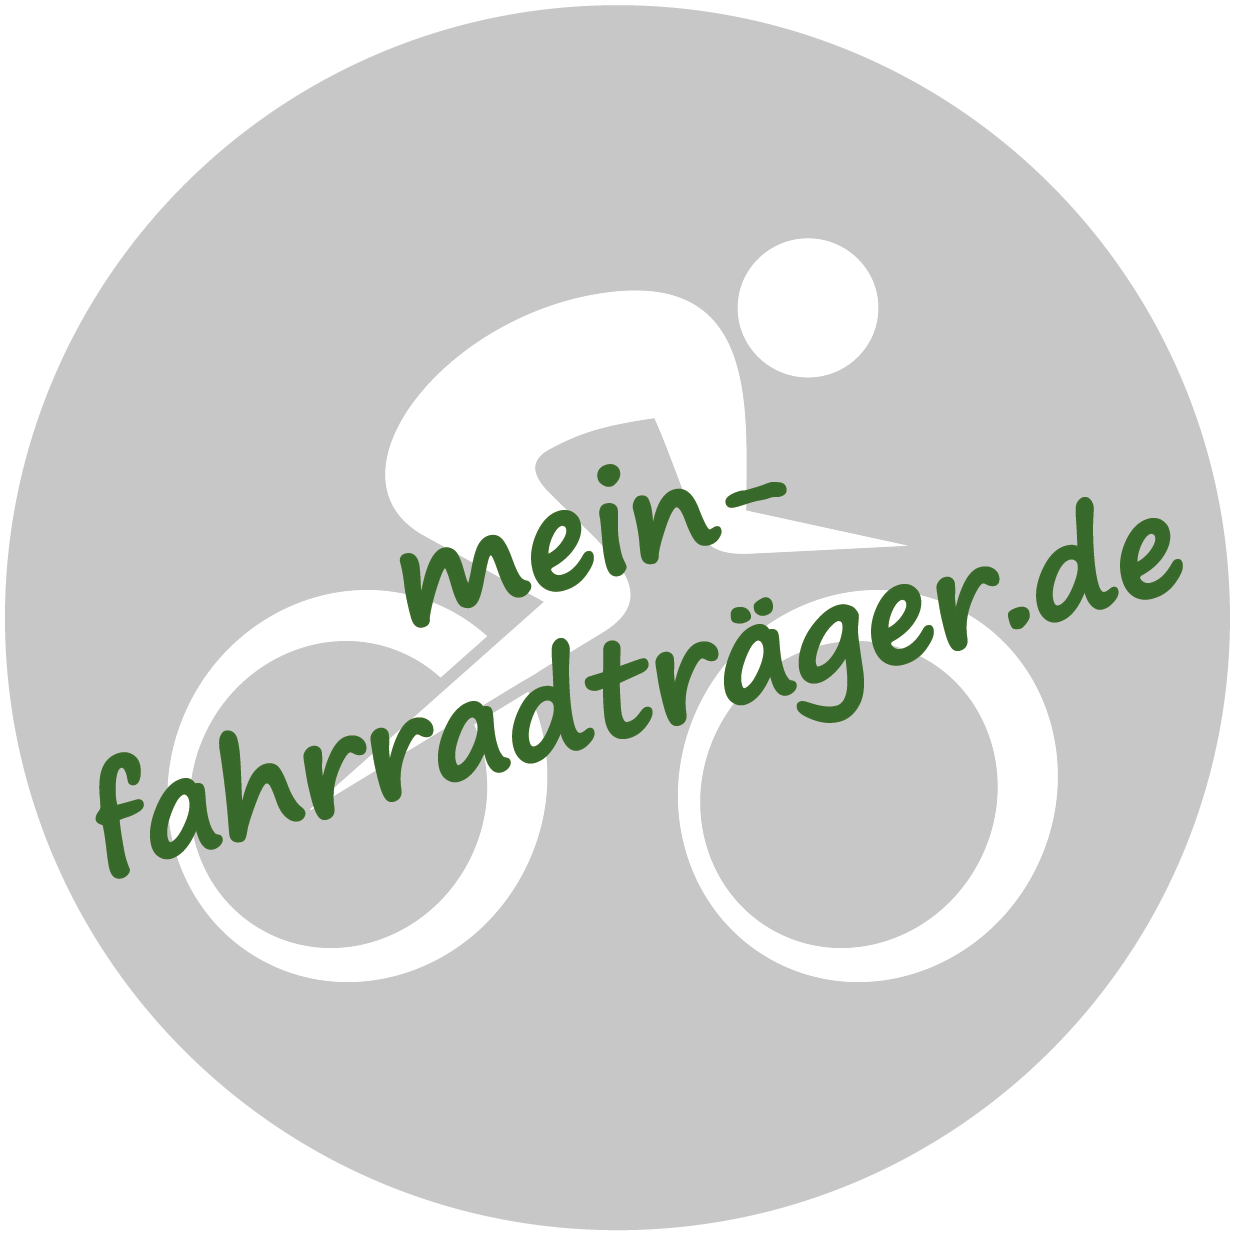 (c) Mein-fahrradtraeger.de